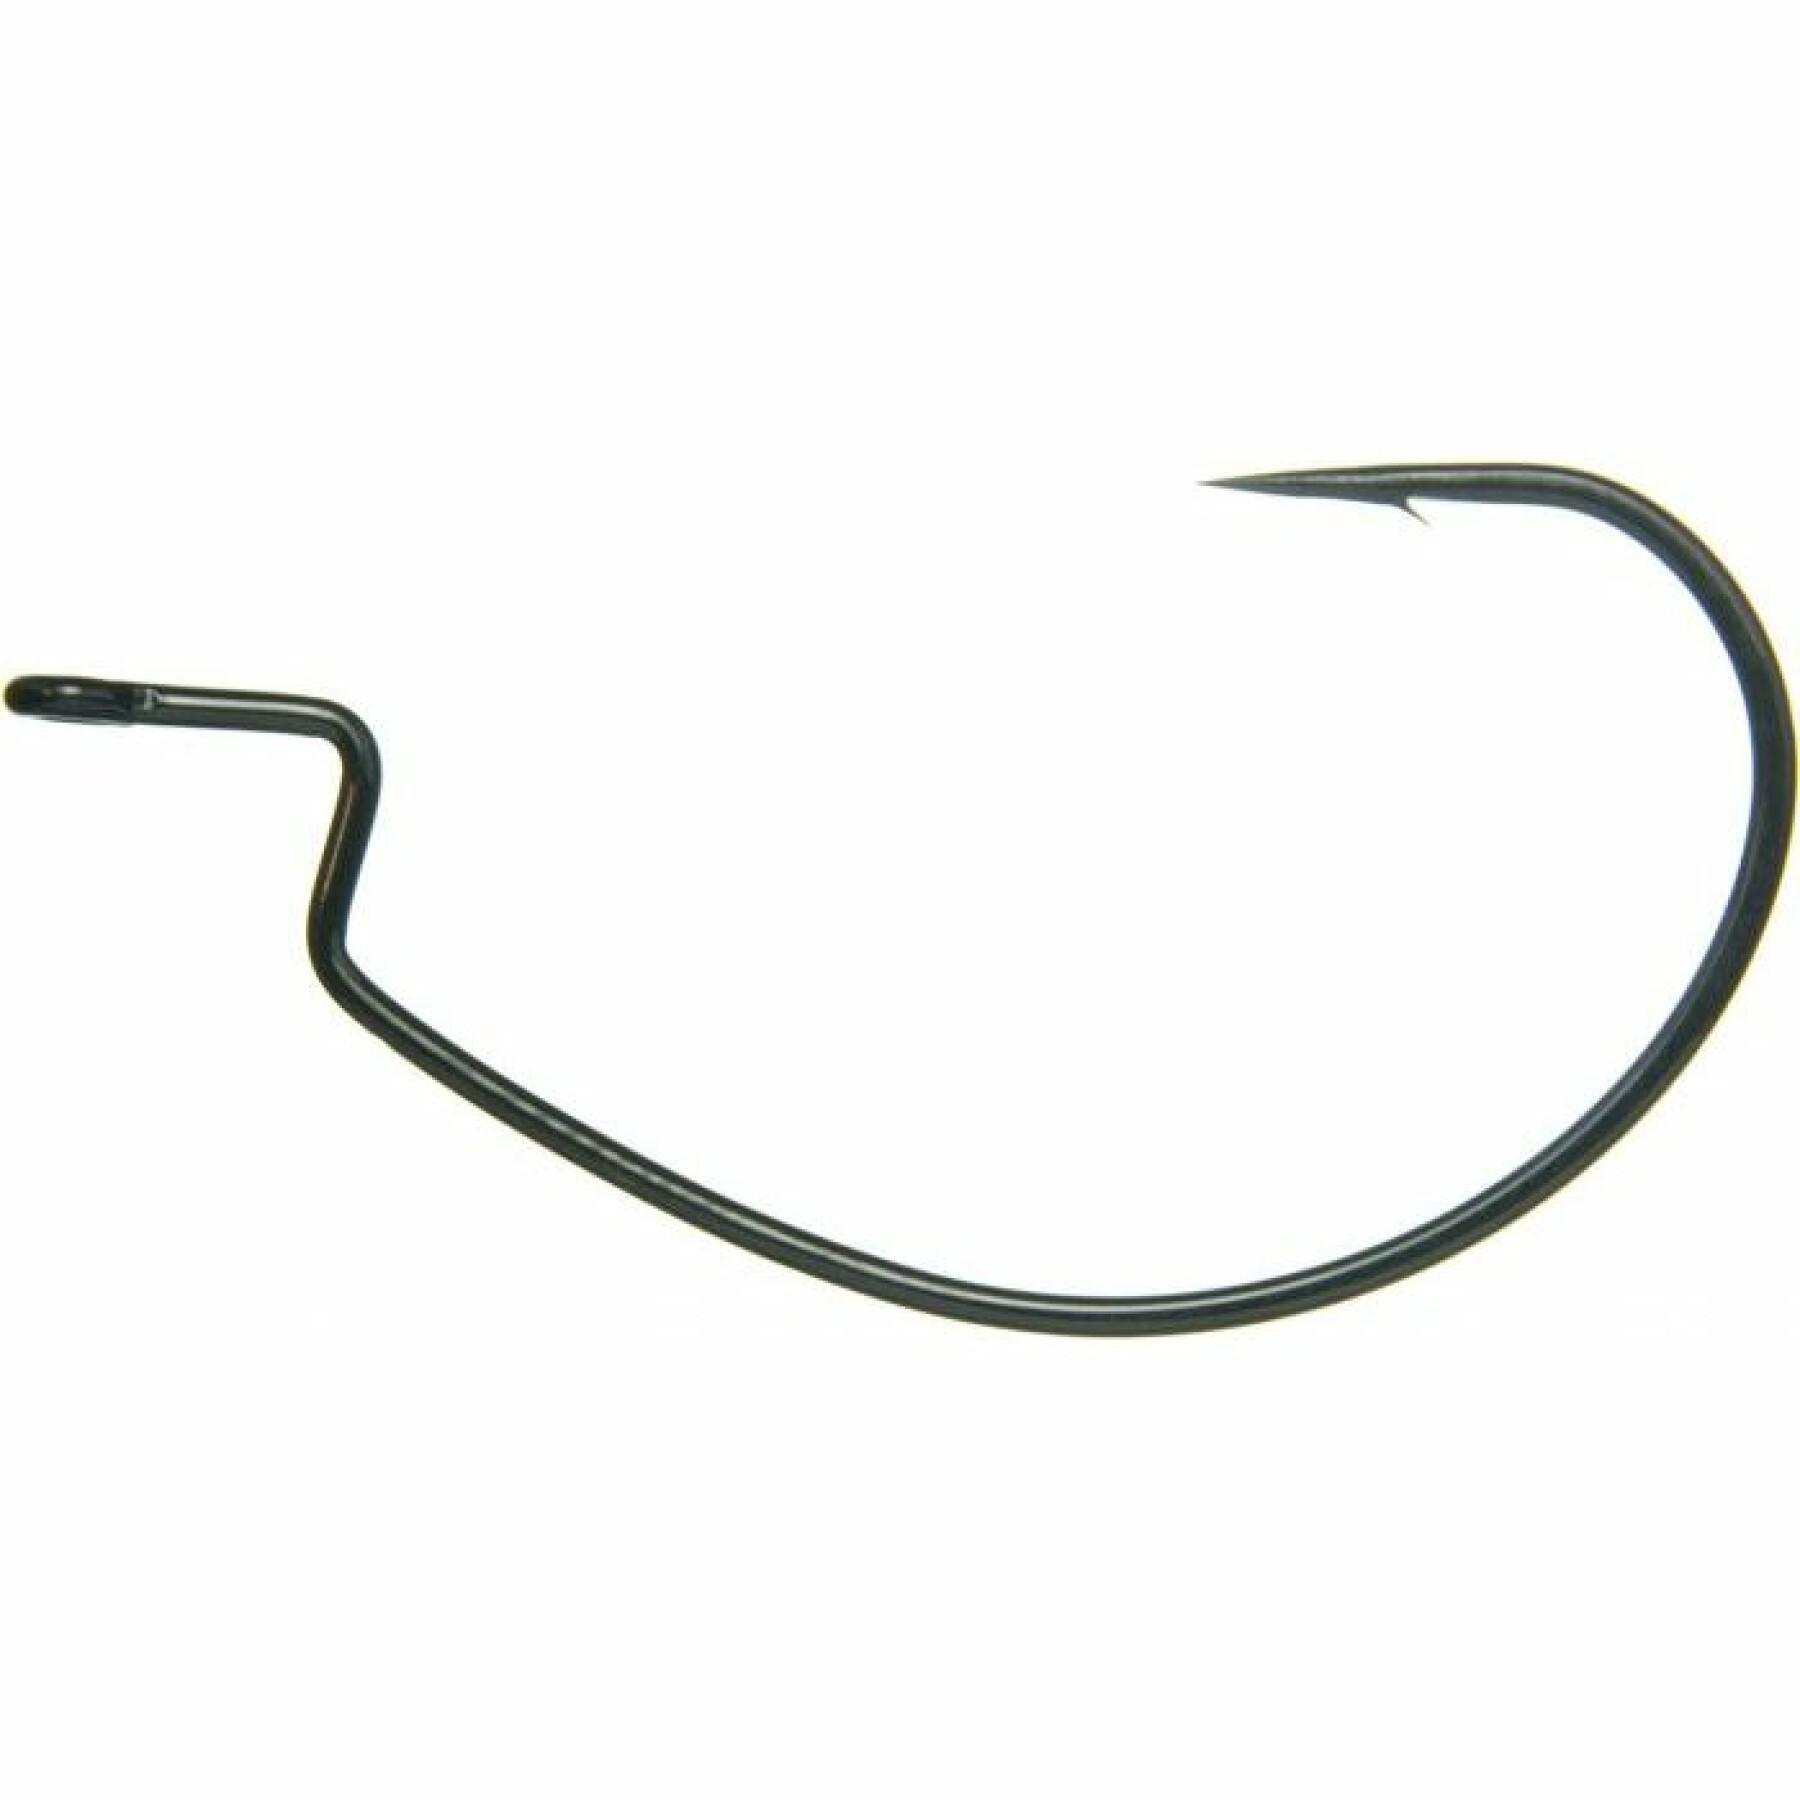 Hook Decoy worm 25 (x7)